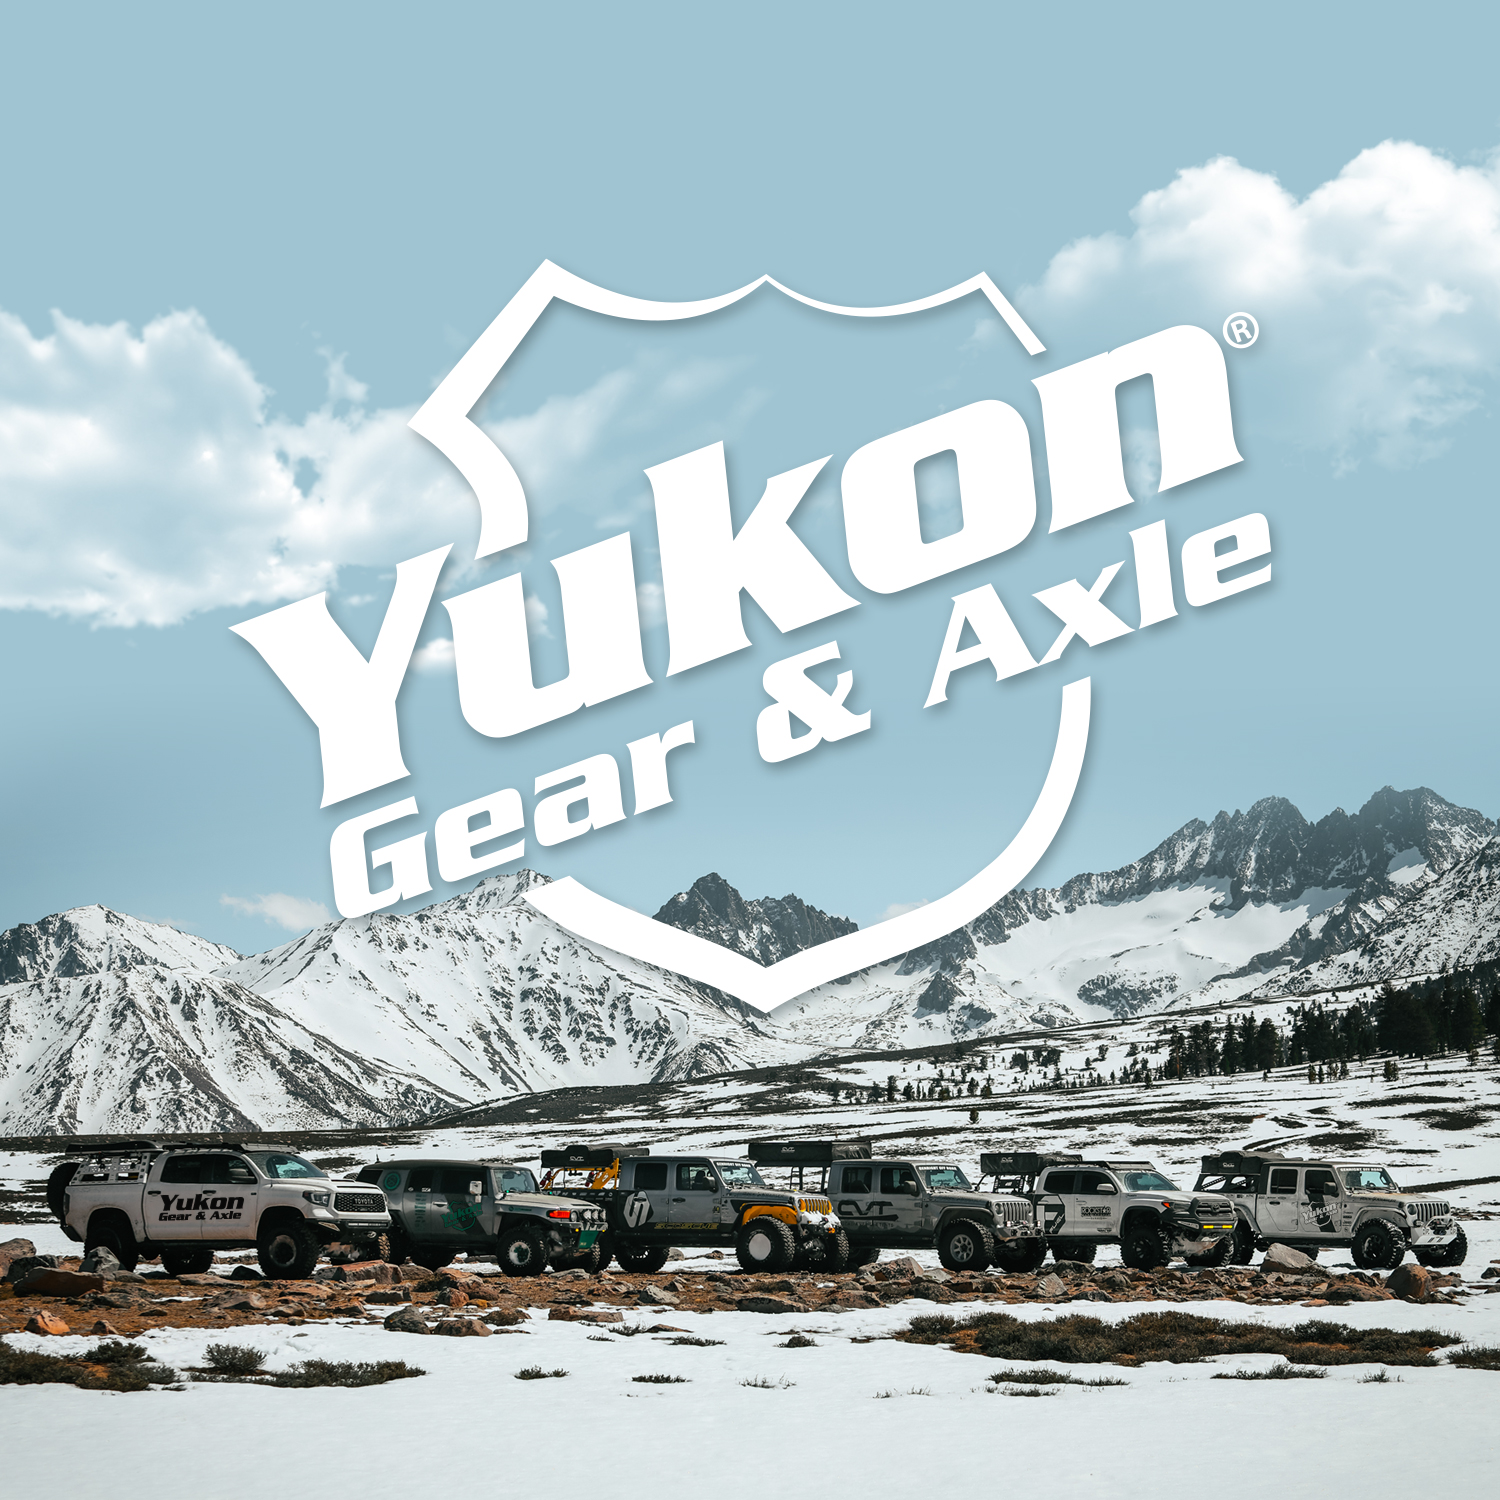 Yukon high performance replacement ring & pinion gear set, Dana 60, 3.73 ratio 